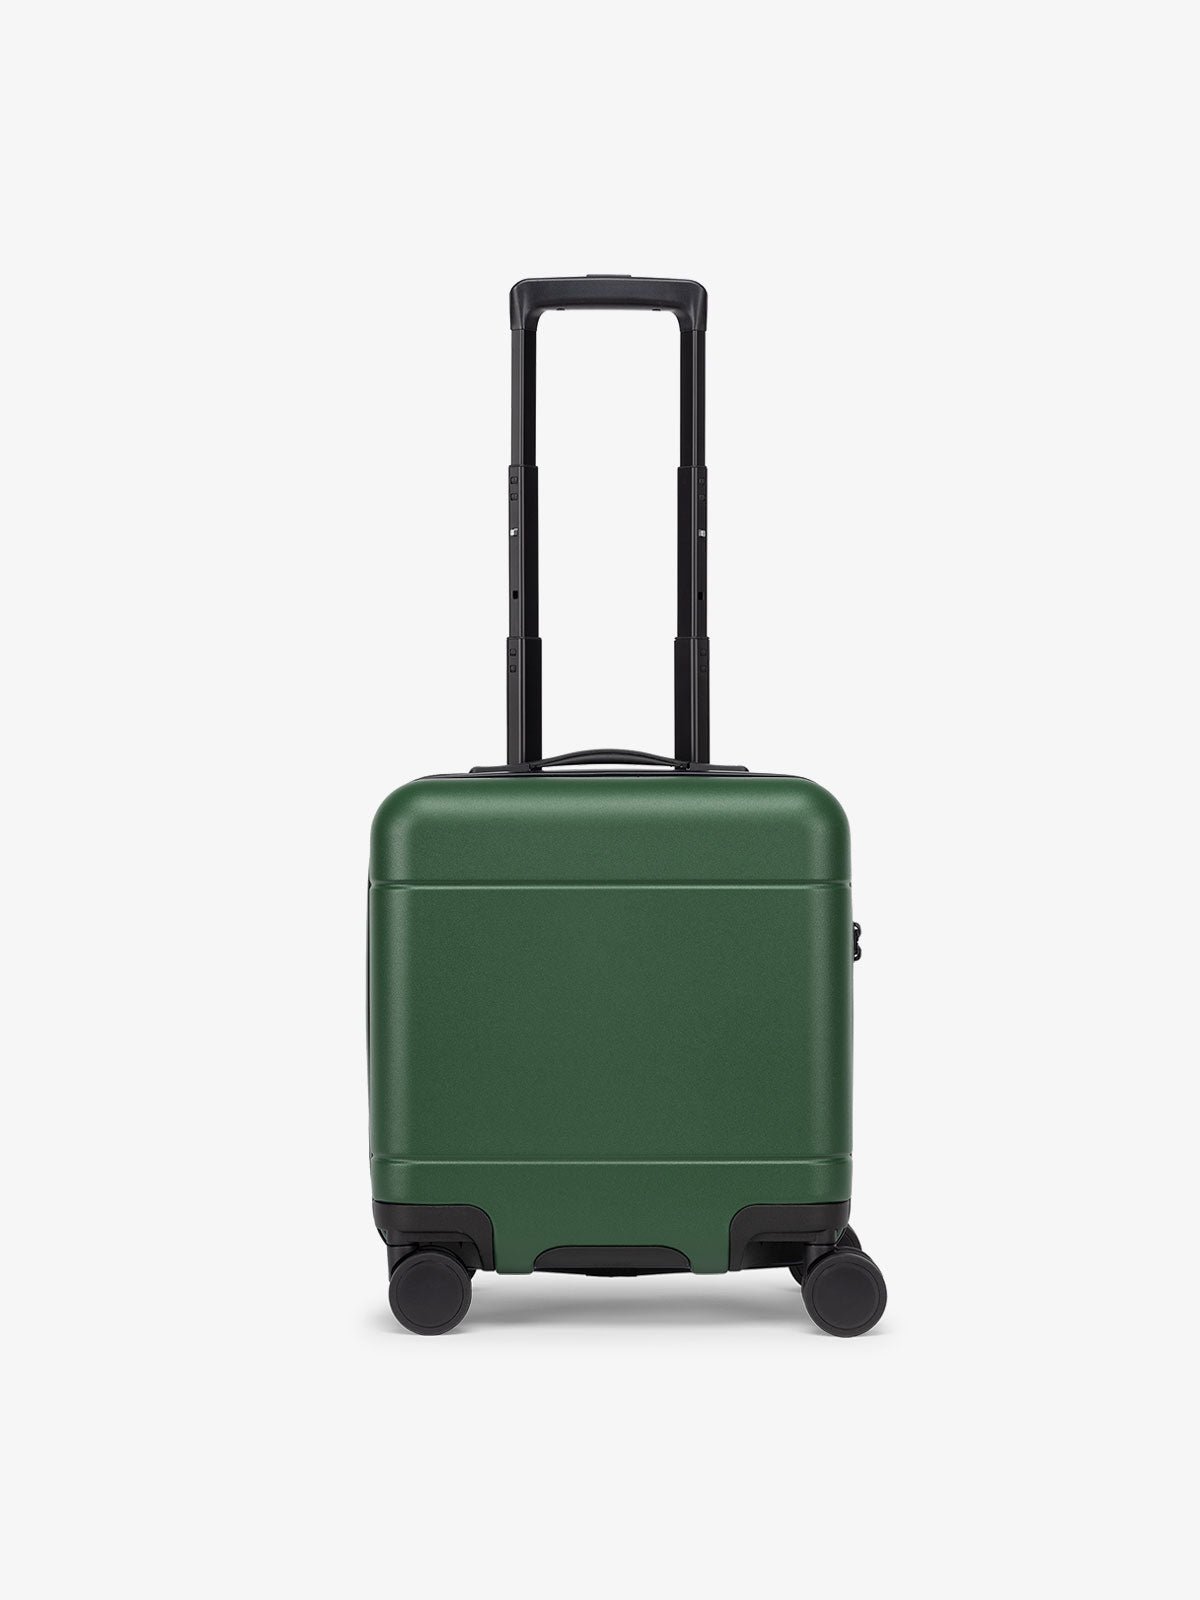 CALPAK Hue Mini Carry-On Luggage in emerald pink